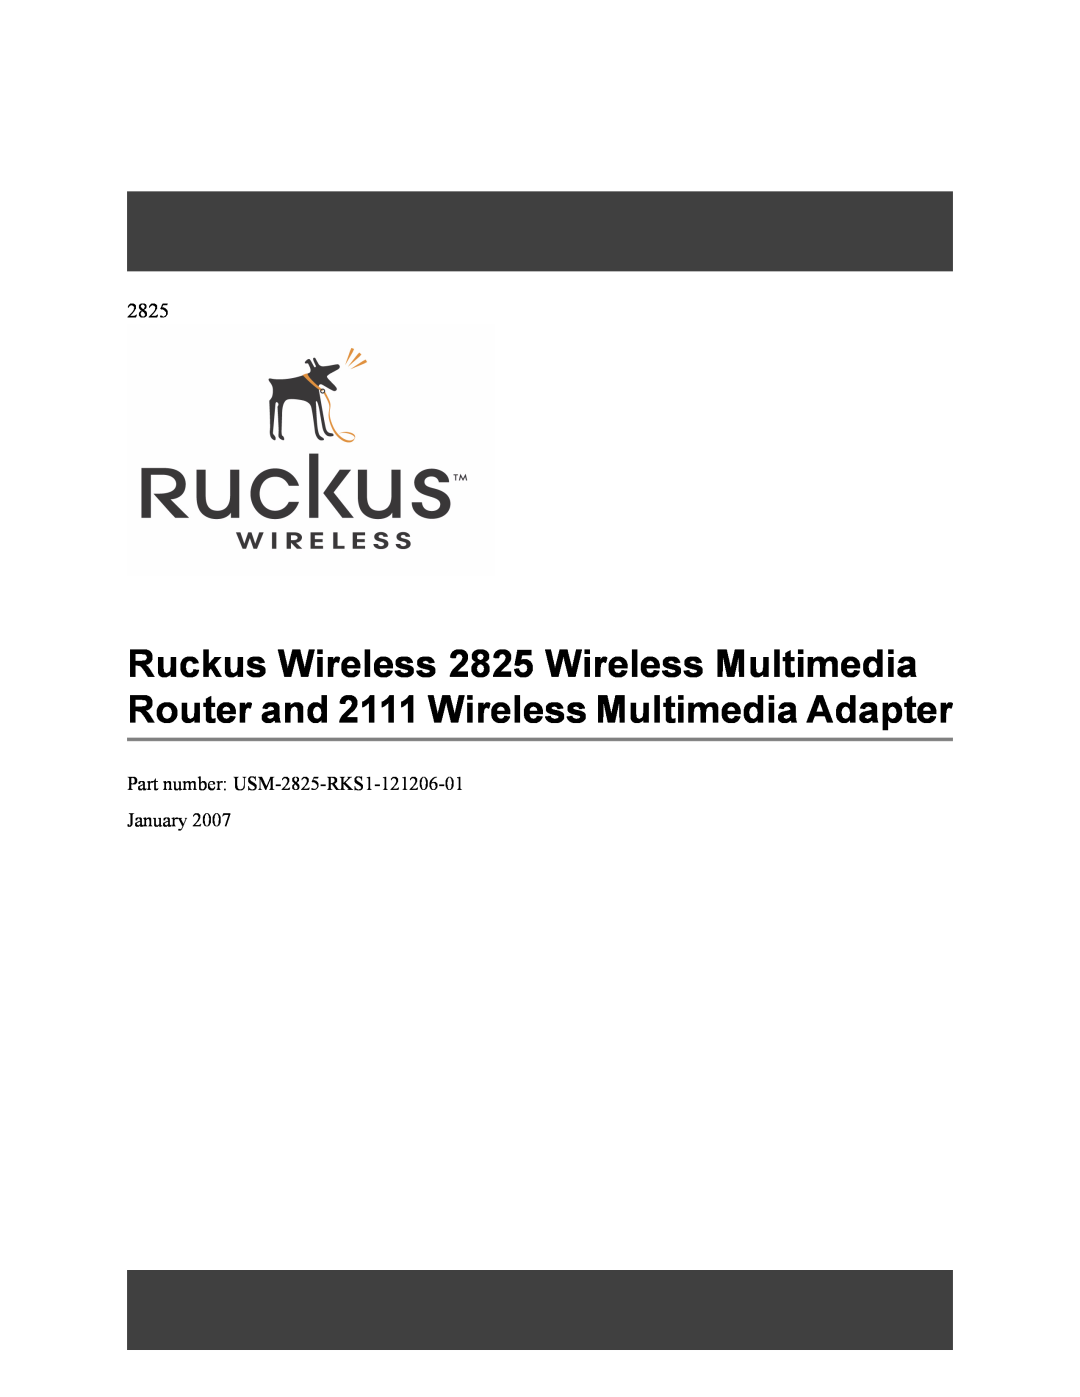 Ruckus Wireless 2111 manual Part number USM-2825-RKS1-121206-01 January 